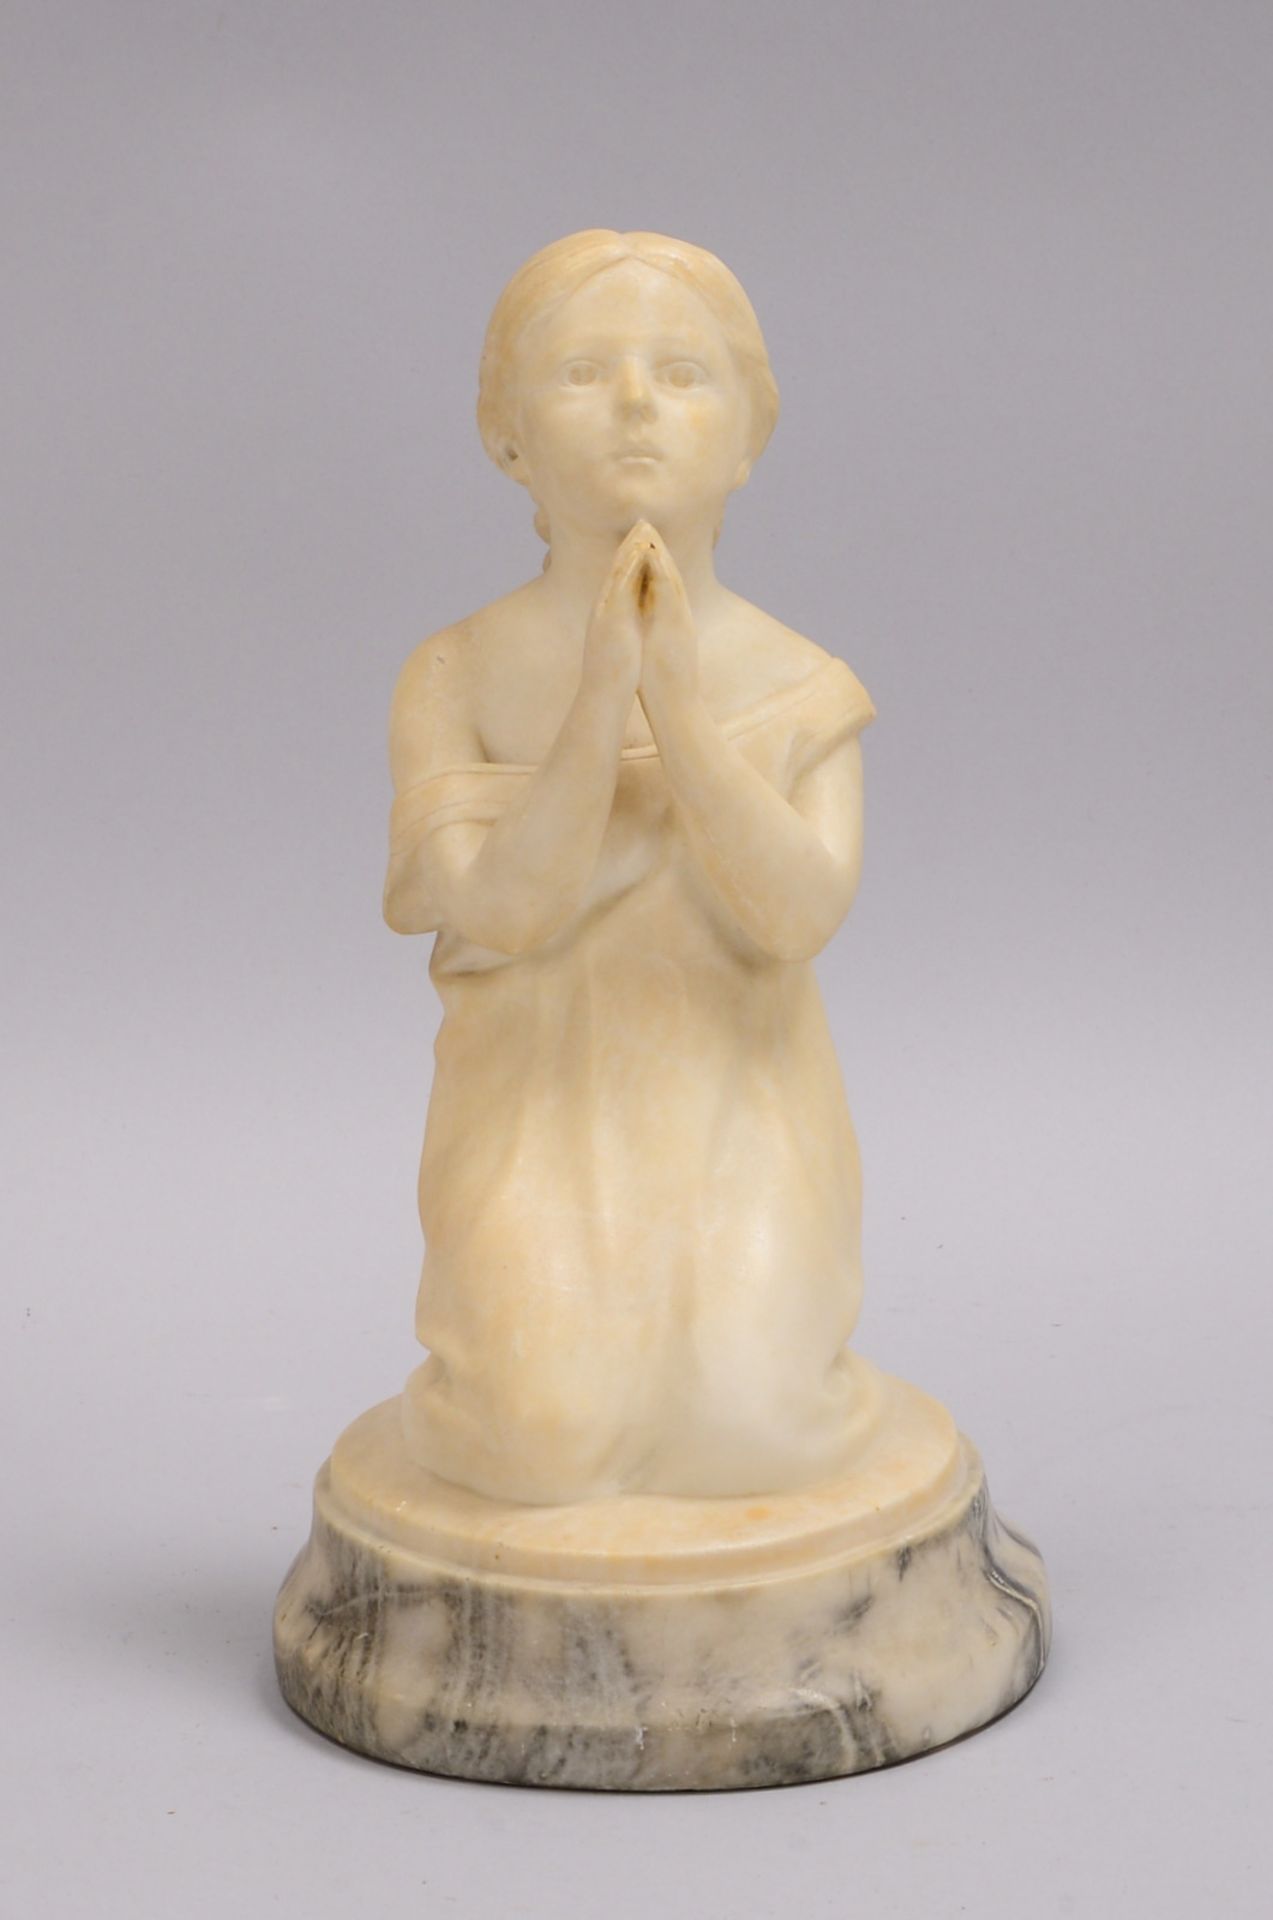 Felling, Alabaster-Skulptur, 'Betende', verso signiert, Figur auf Marmorsockel; Höhe 27 cm - Bild 2 aus 3